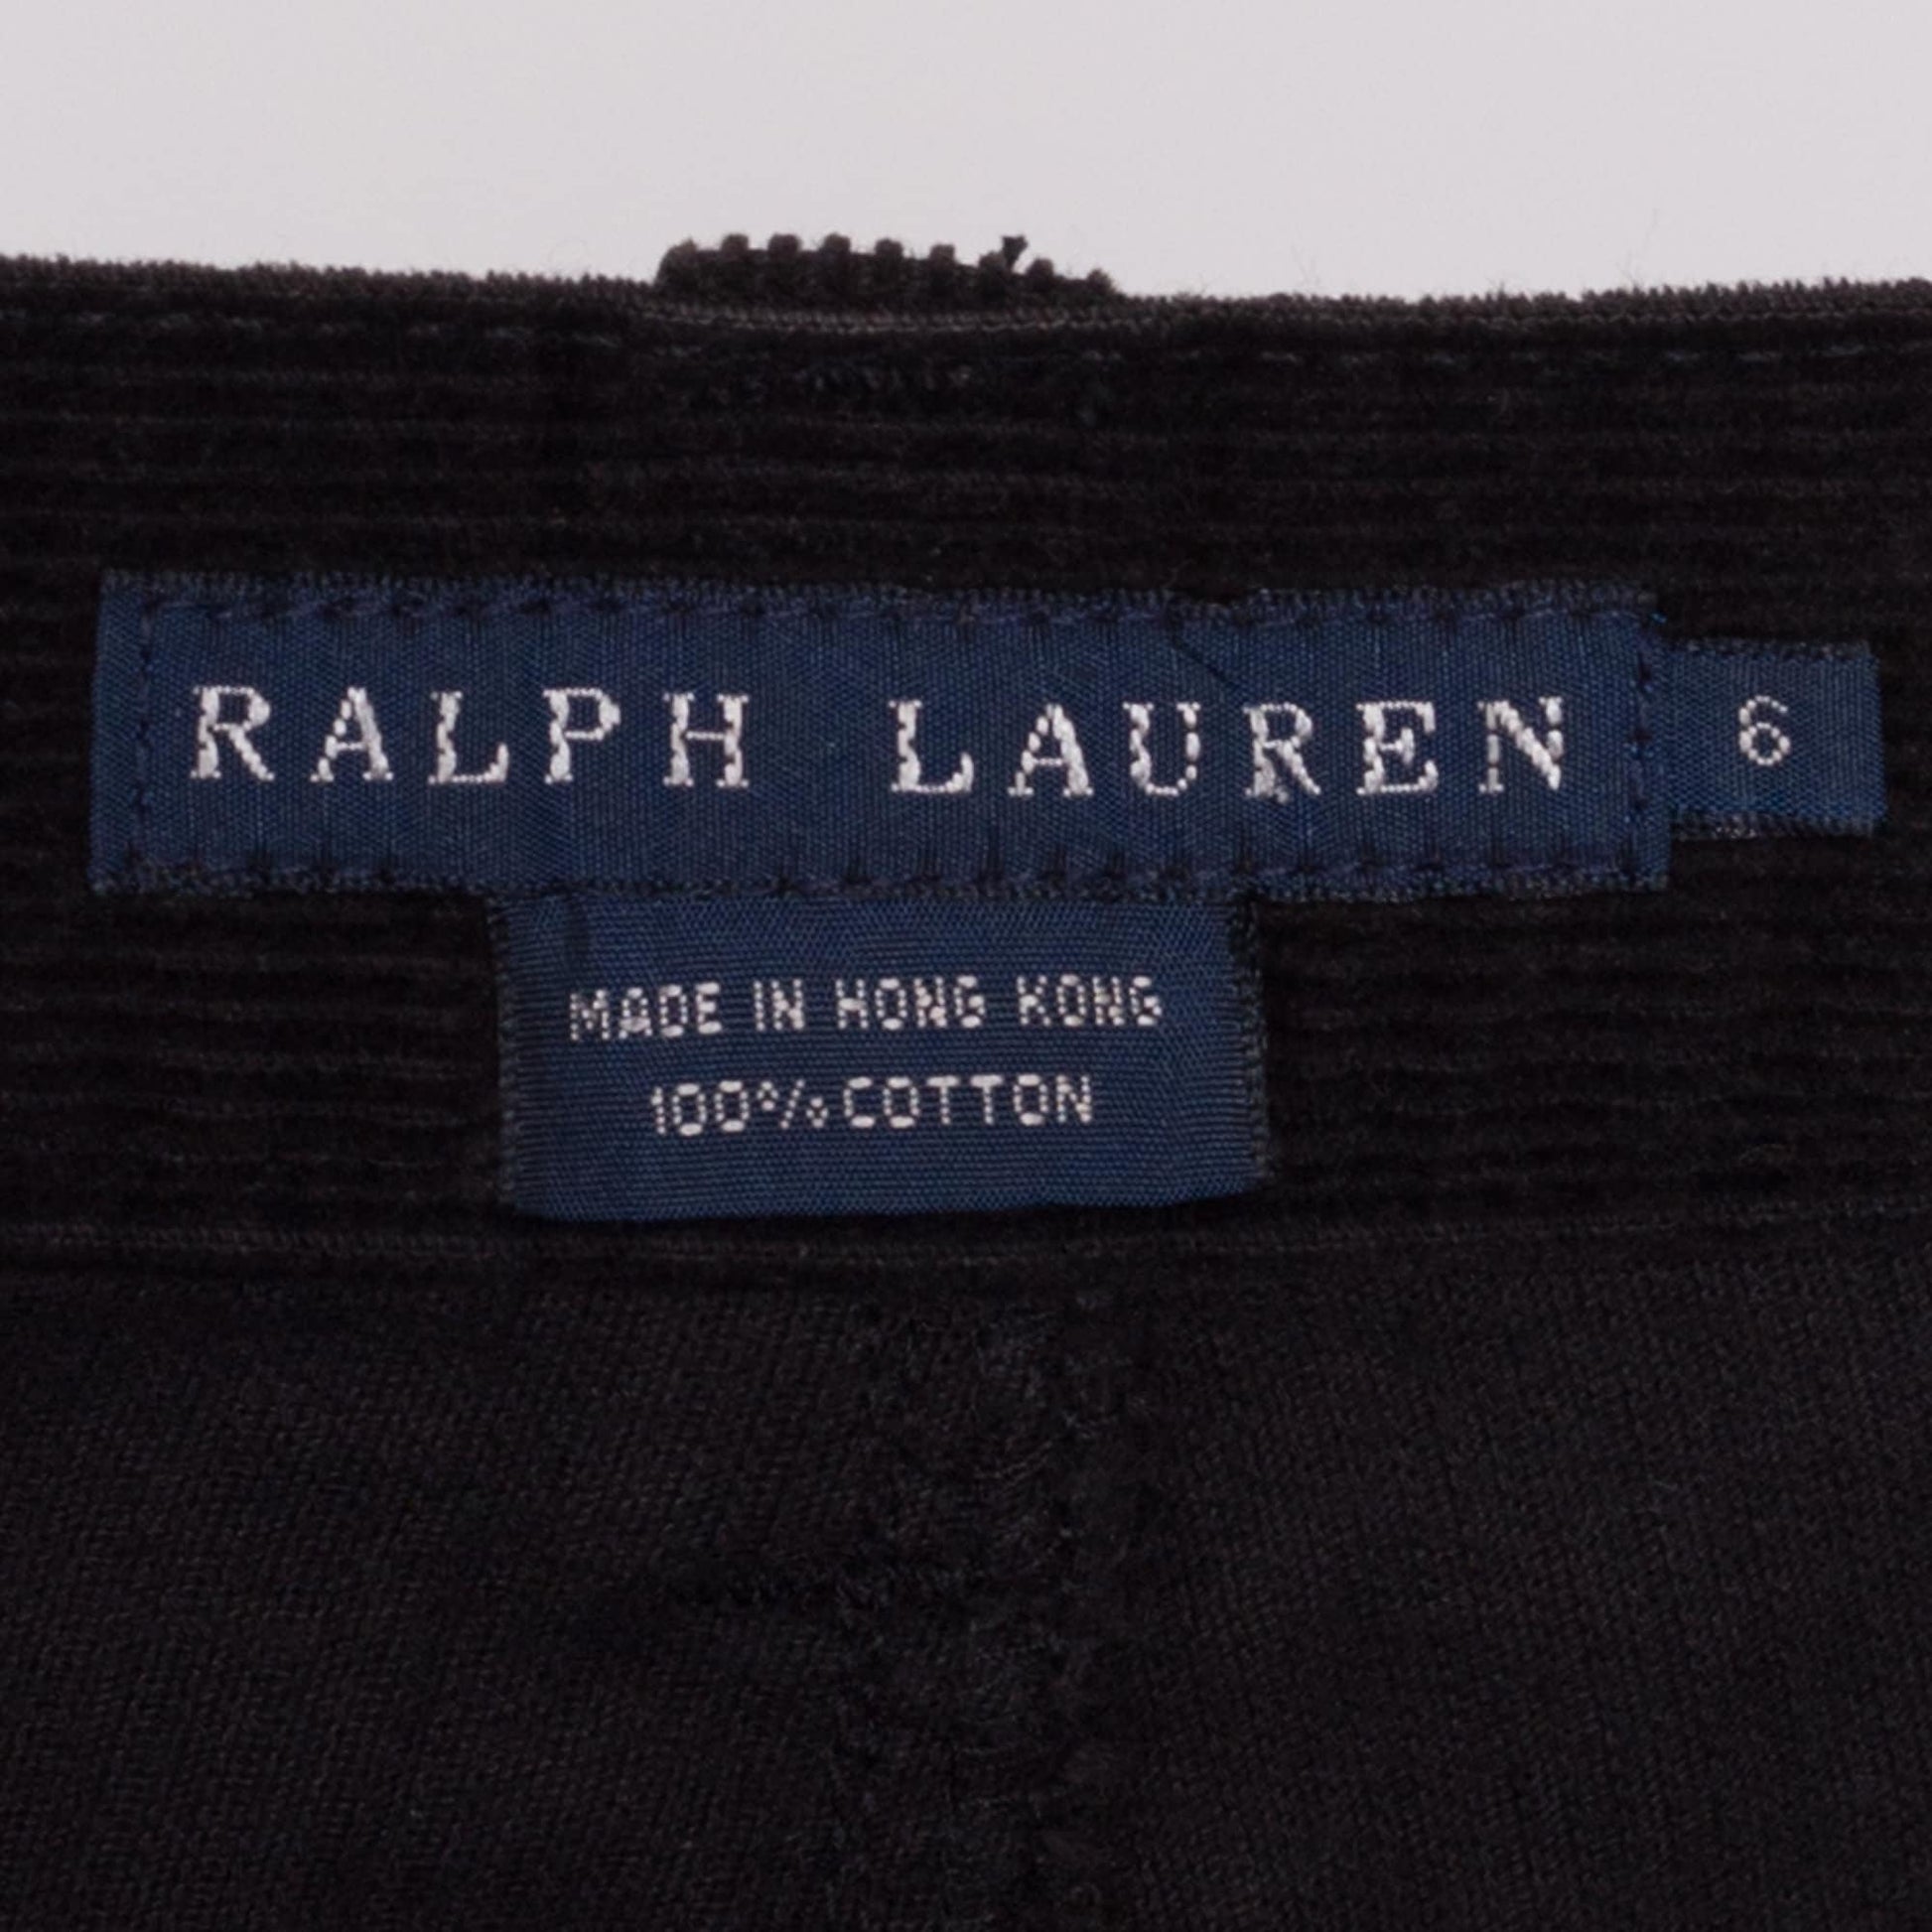 Small Y2K Ralph Lauren Black Corduroy Pants | Vintage Low Rise Tapered Leg Trousers